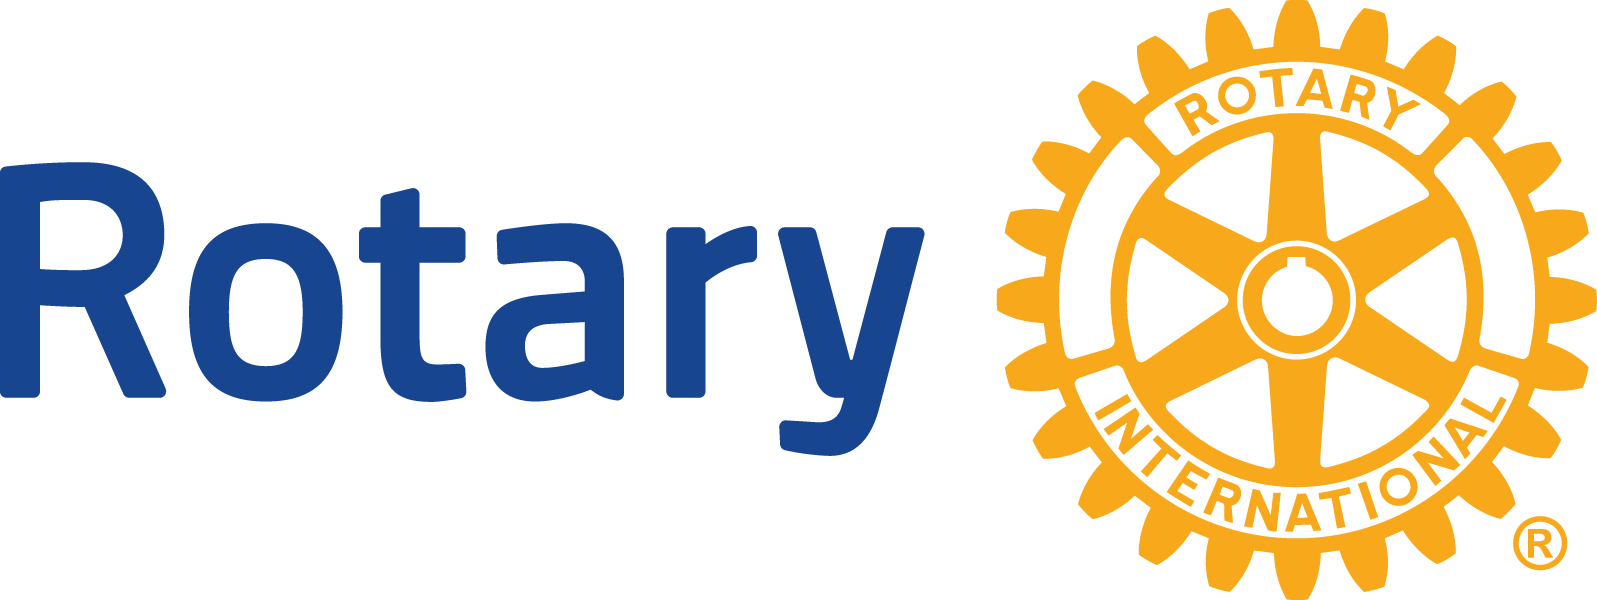 The Rotary Club of London Foundation logo